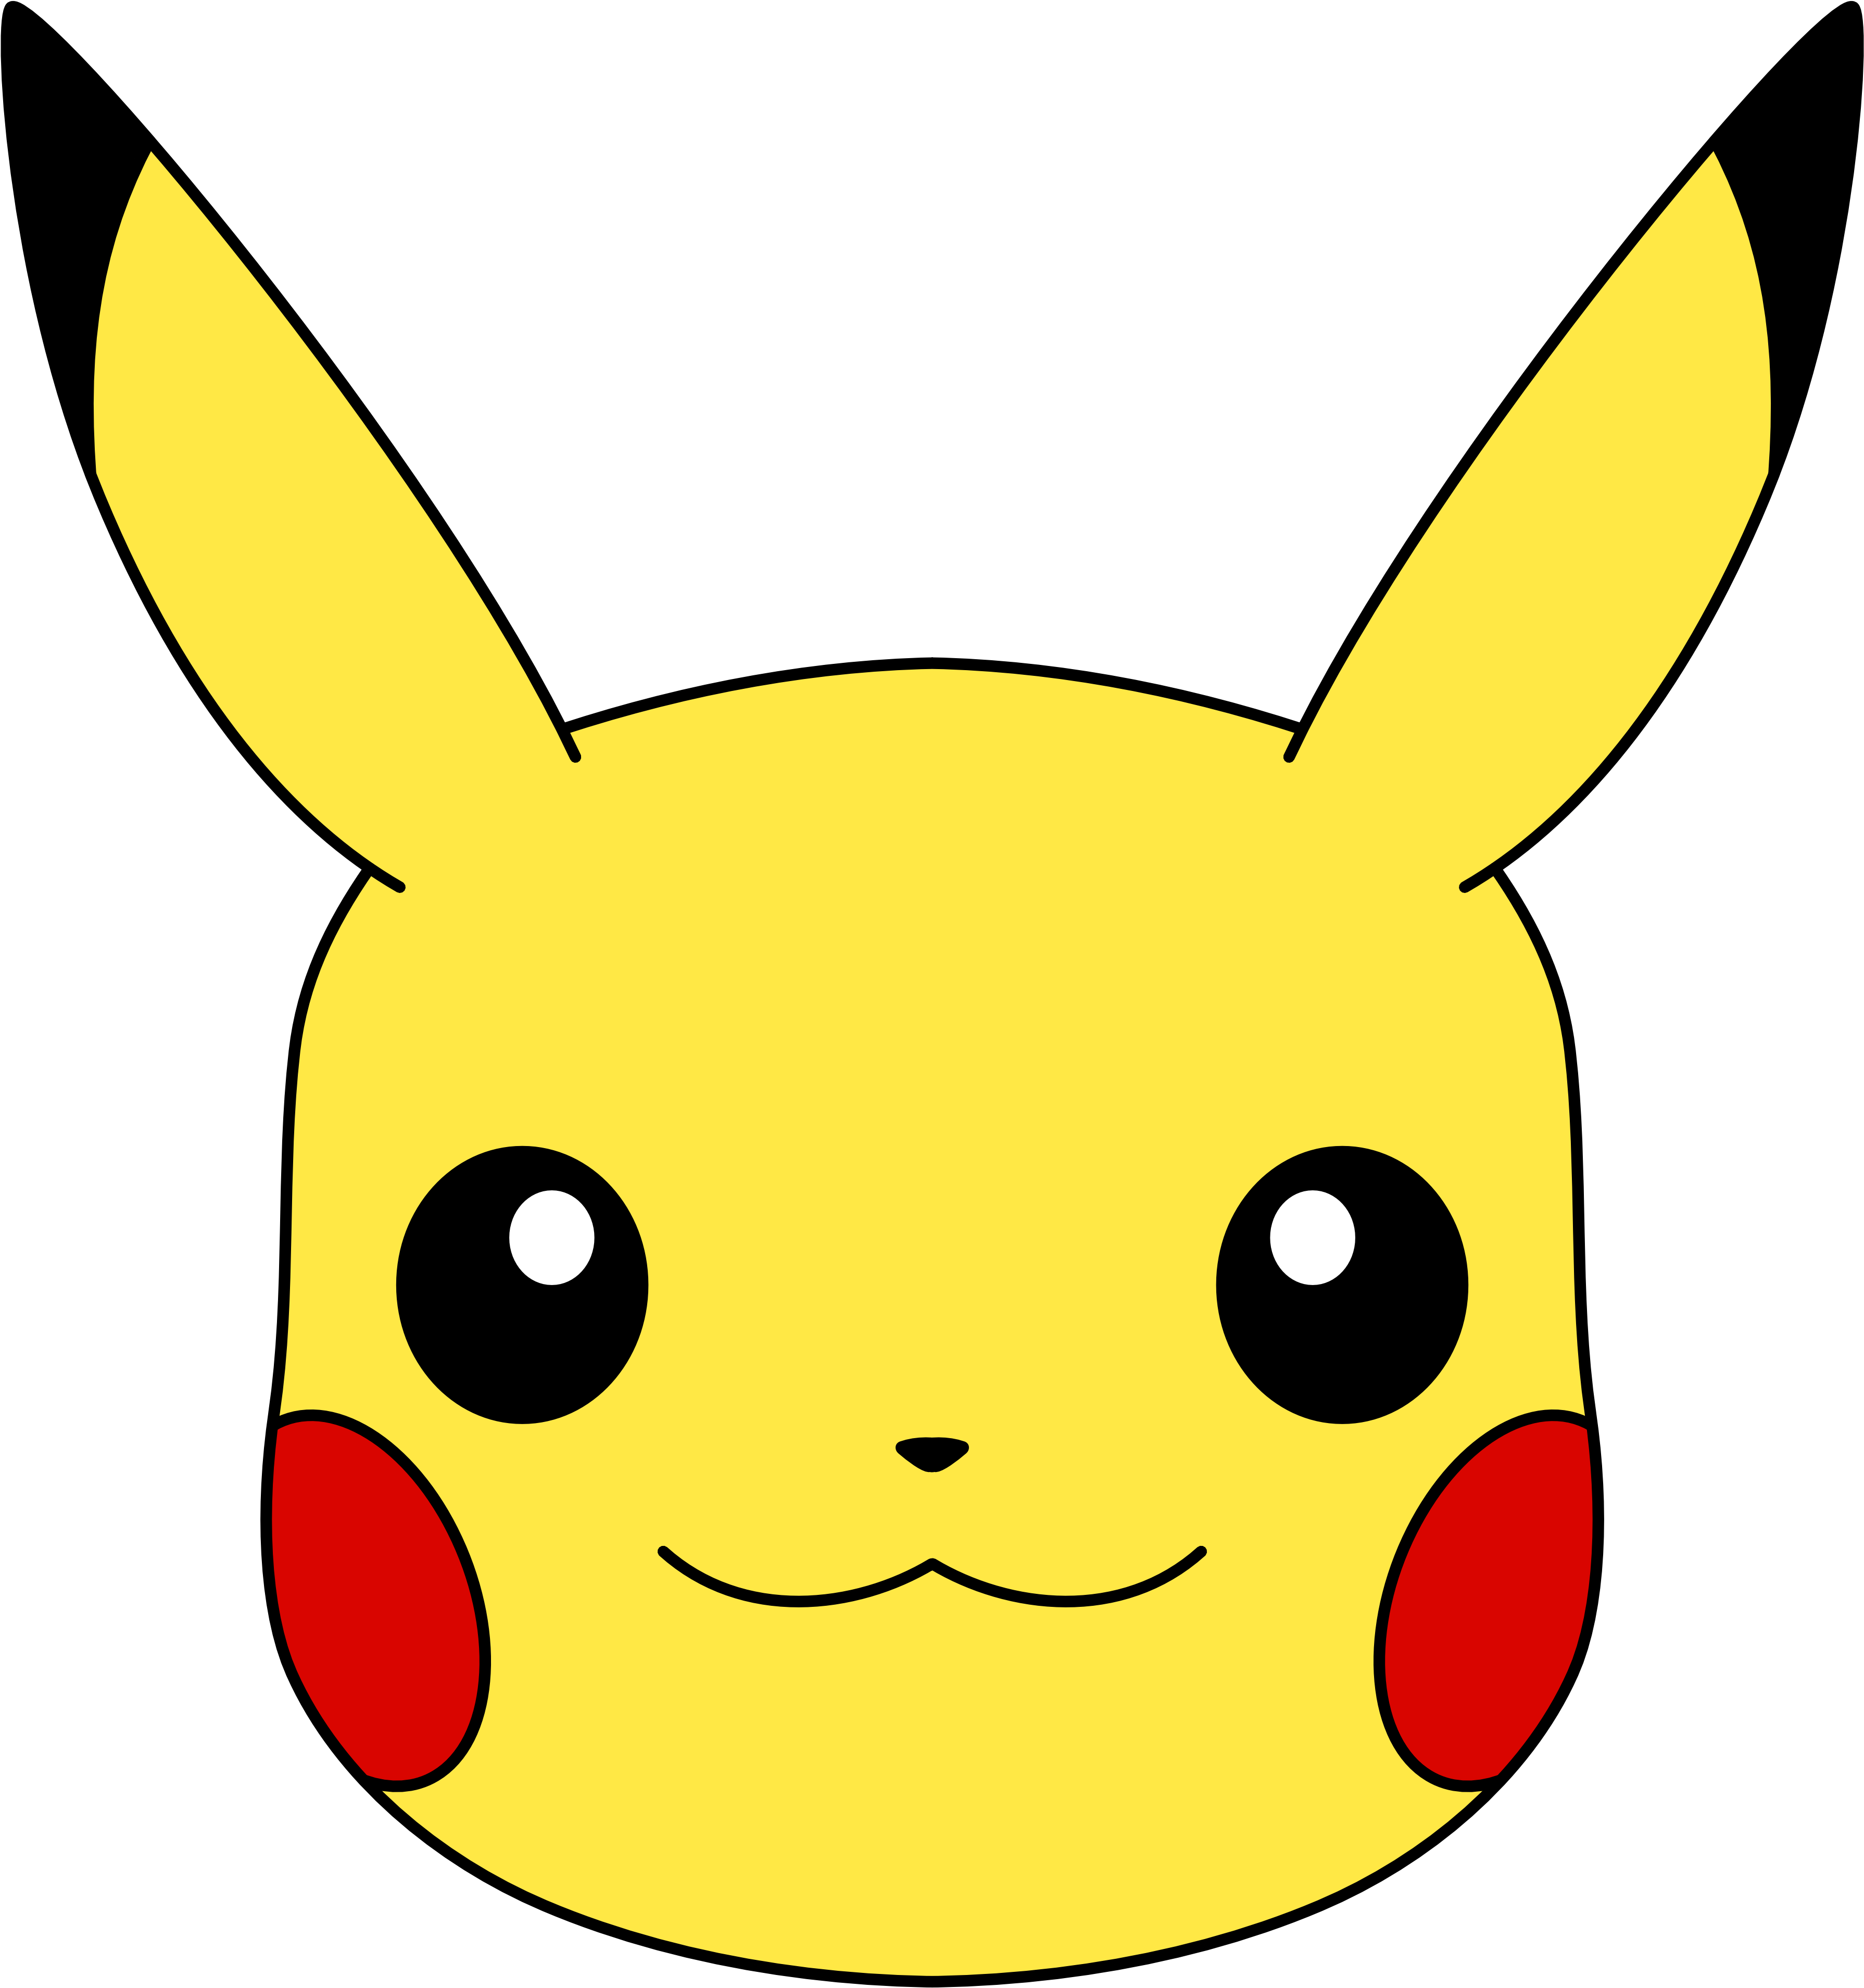 Pikachu Meme Background PNG Image